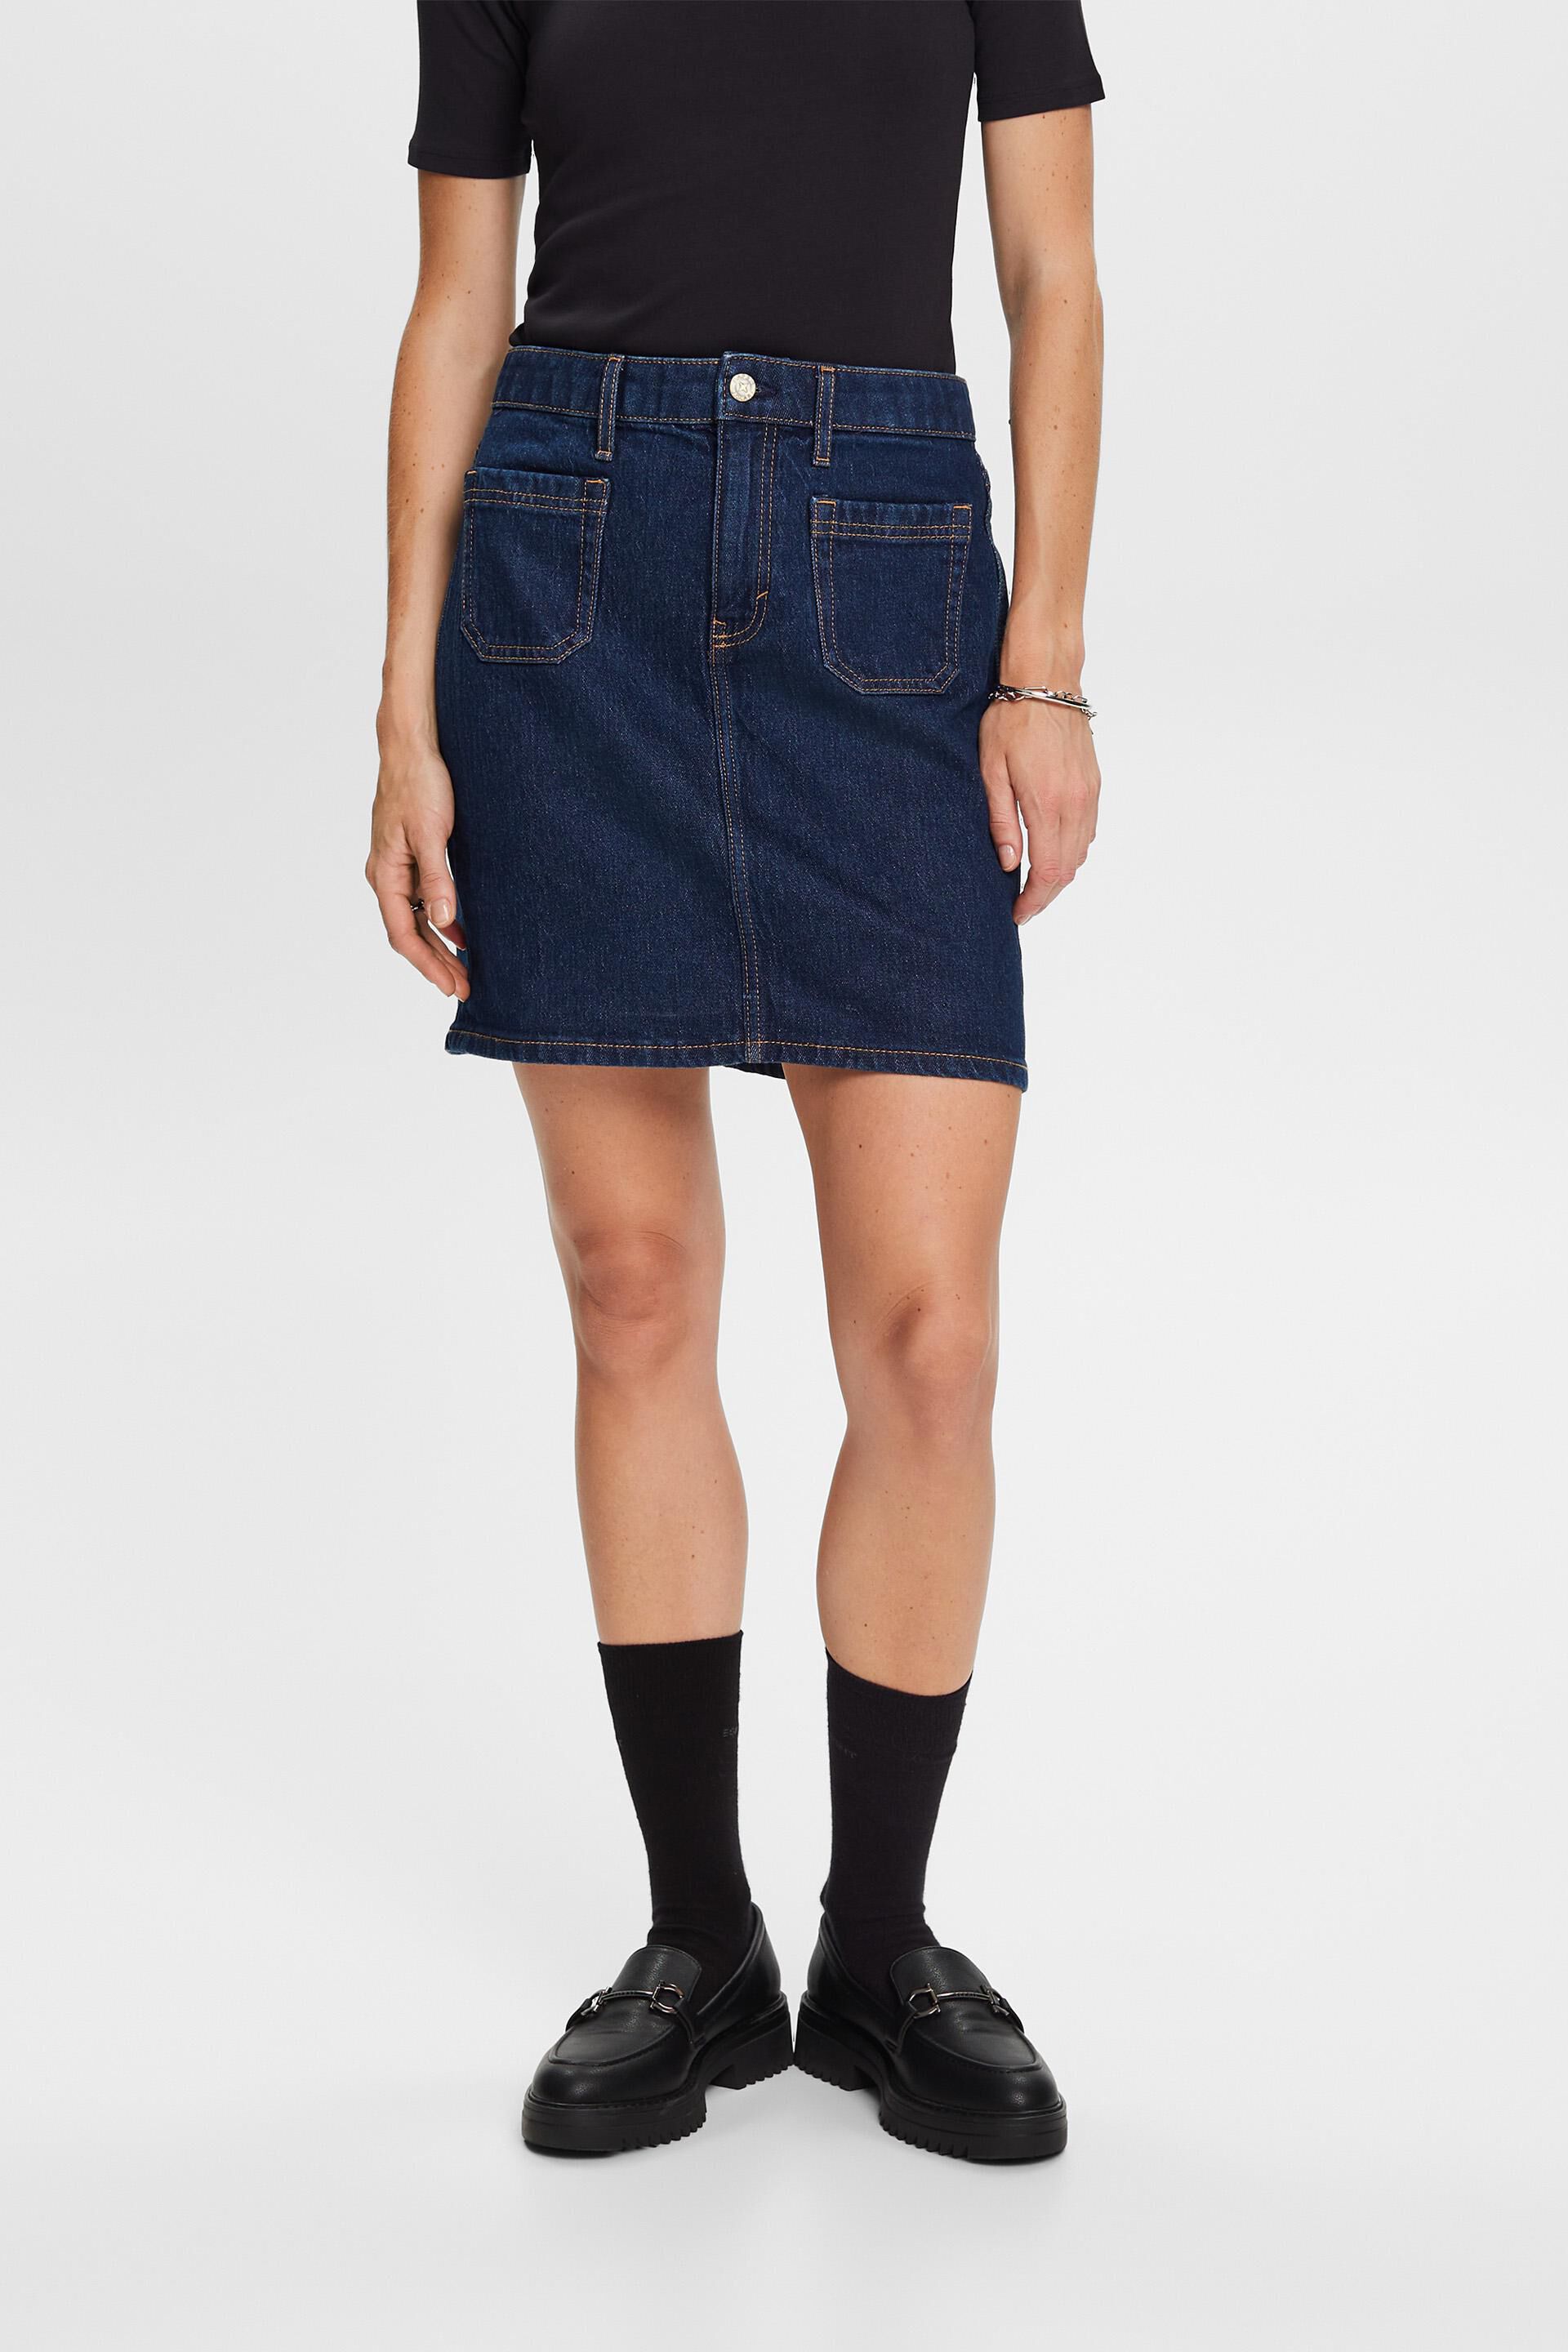 Esprit Damen Recycled: jeans skirt mini